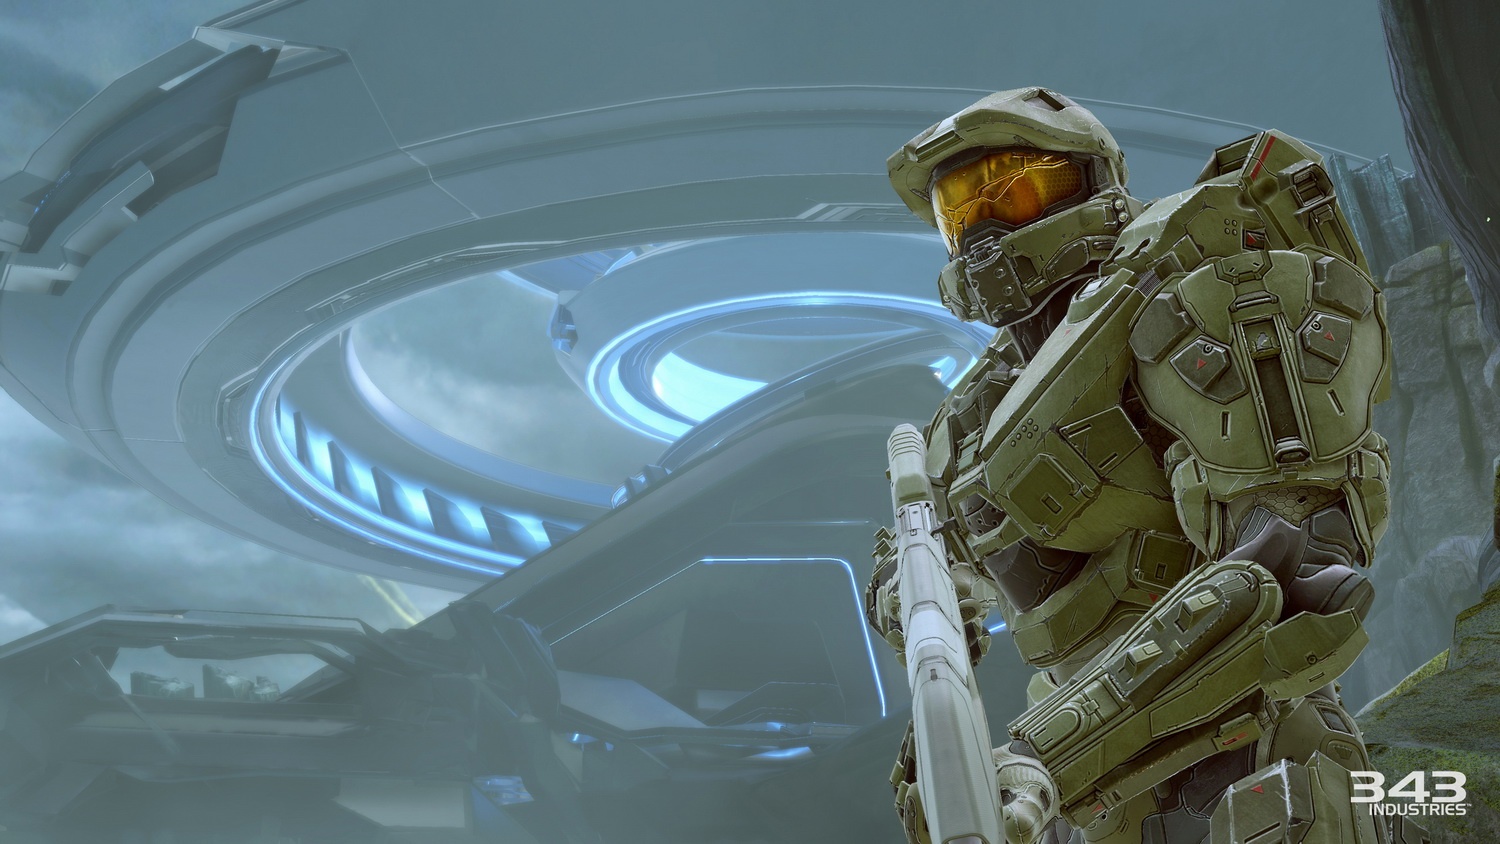 Halo 5 Guardians - Xbox One [Digital] 